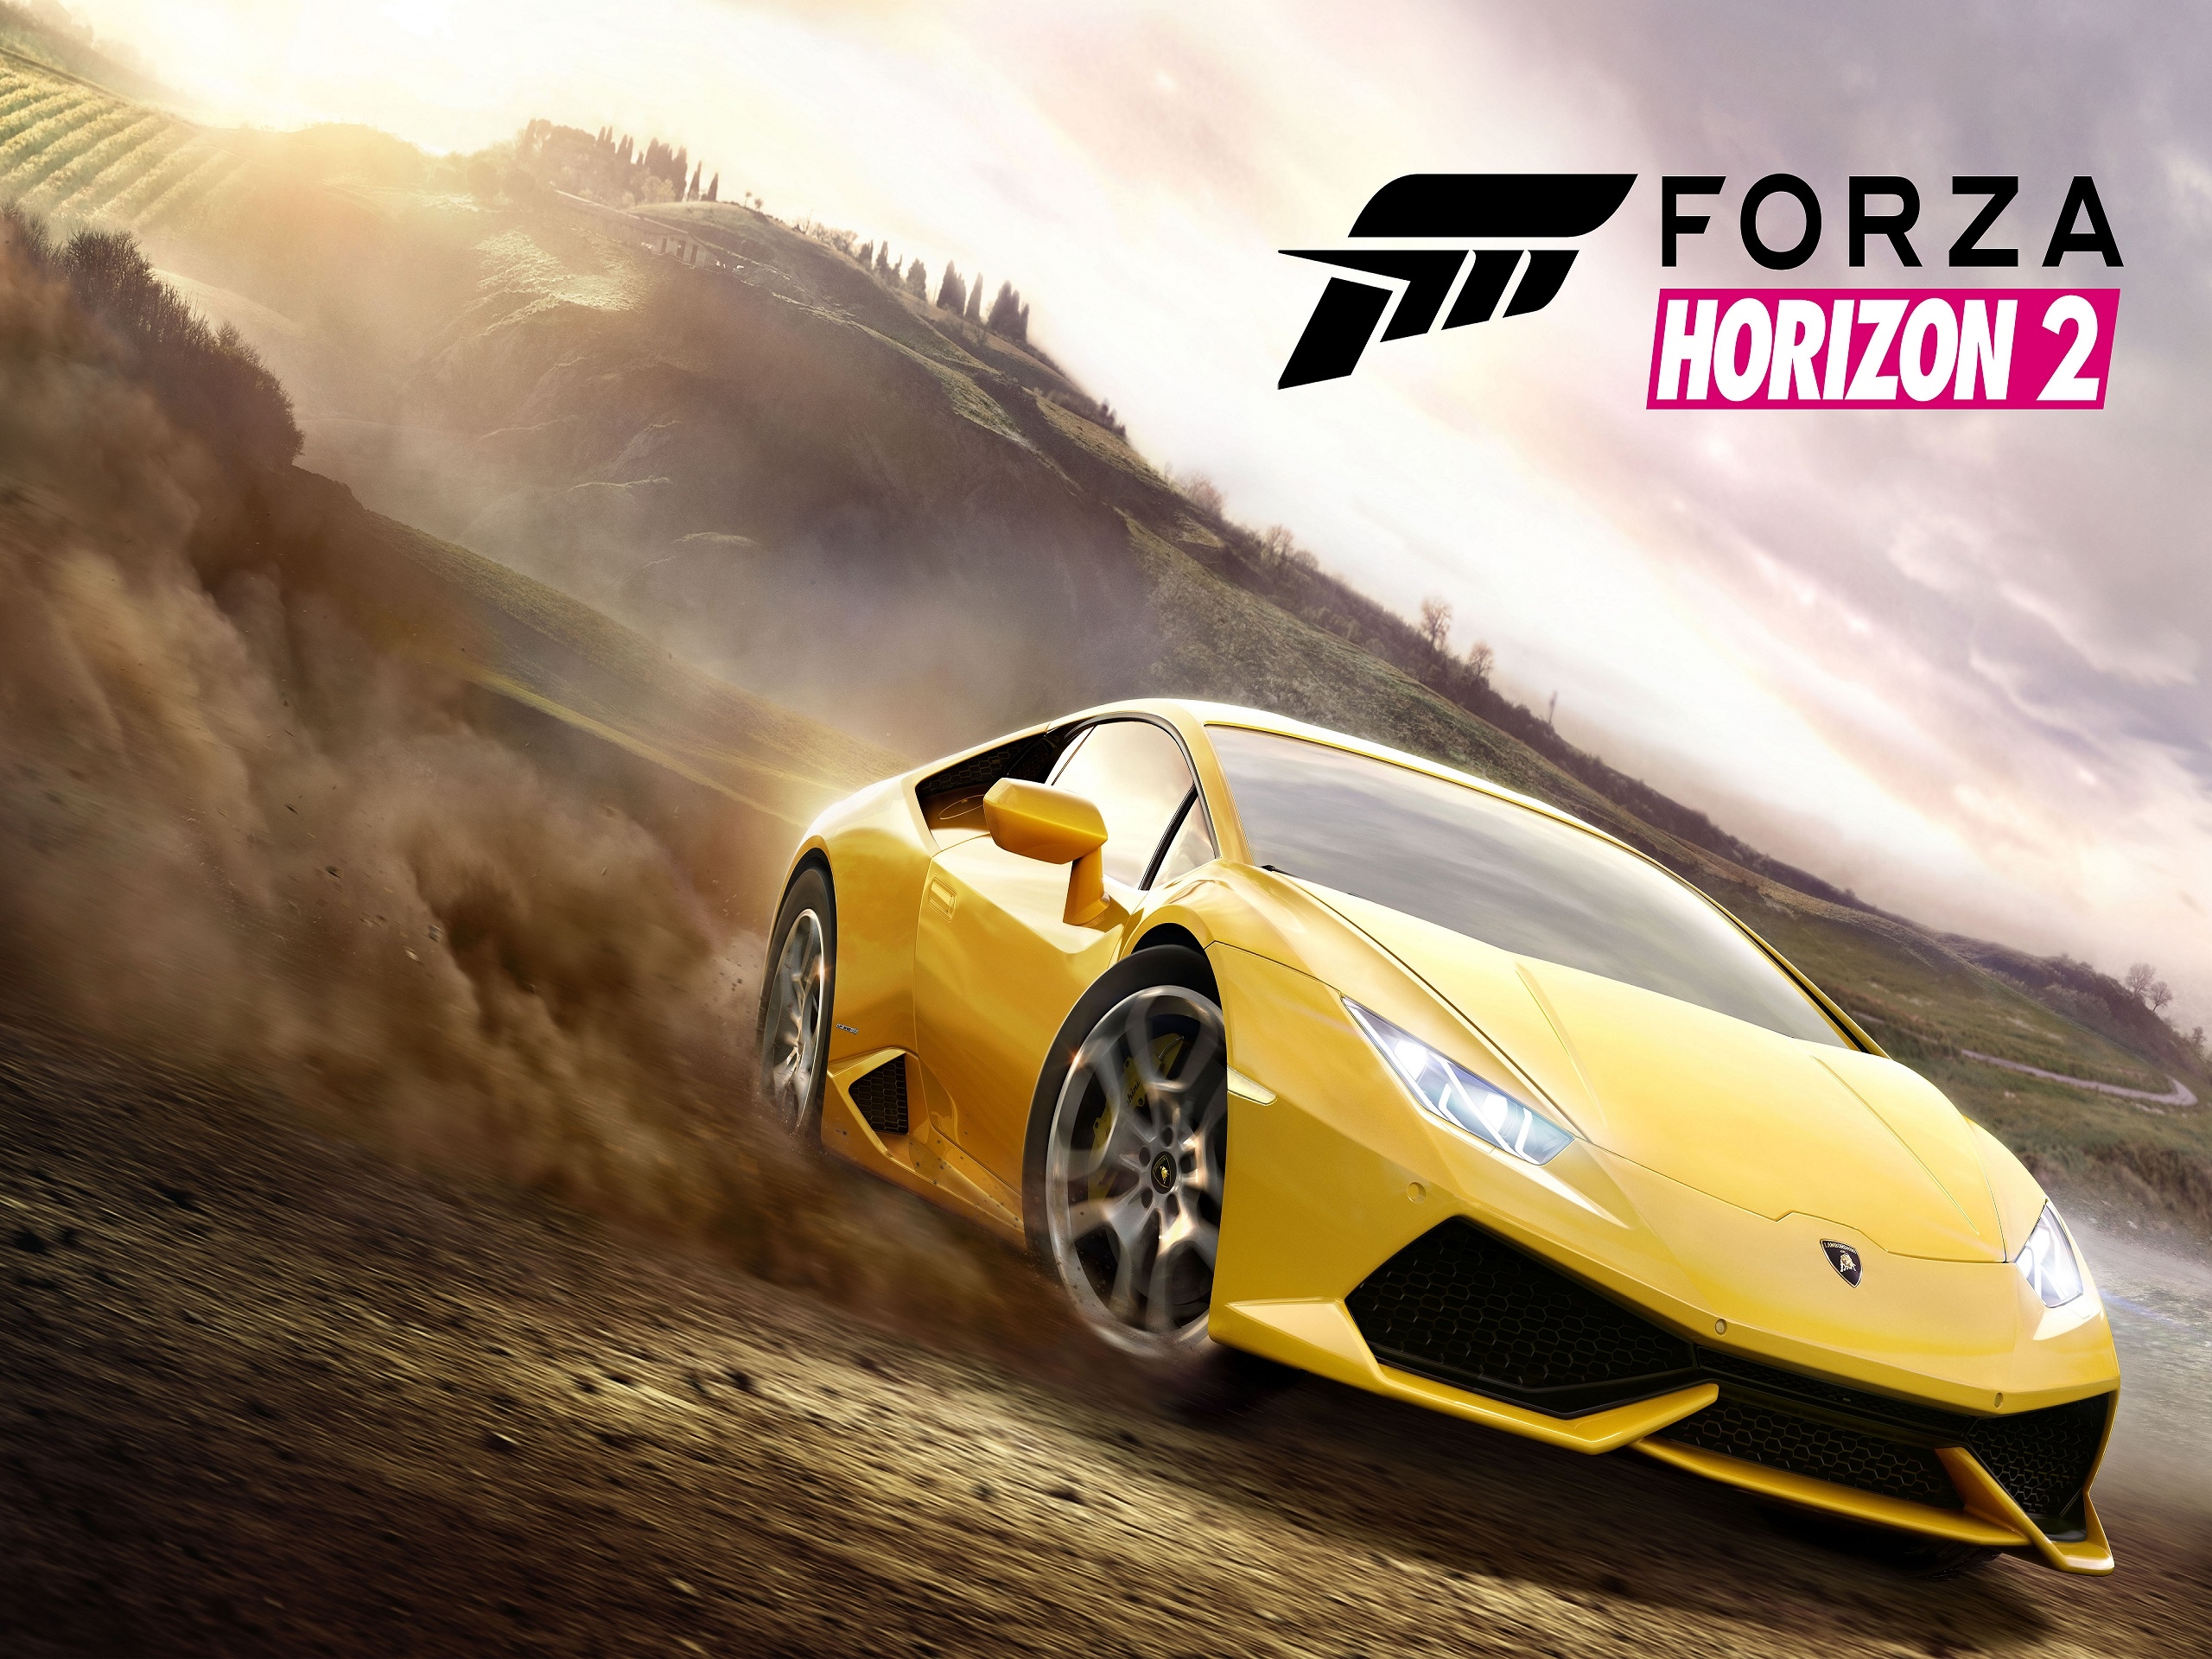 Forza Horizon 2 for 2560 x 1920 resolution